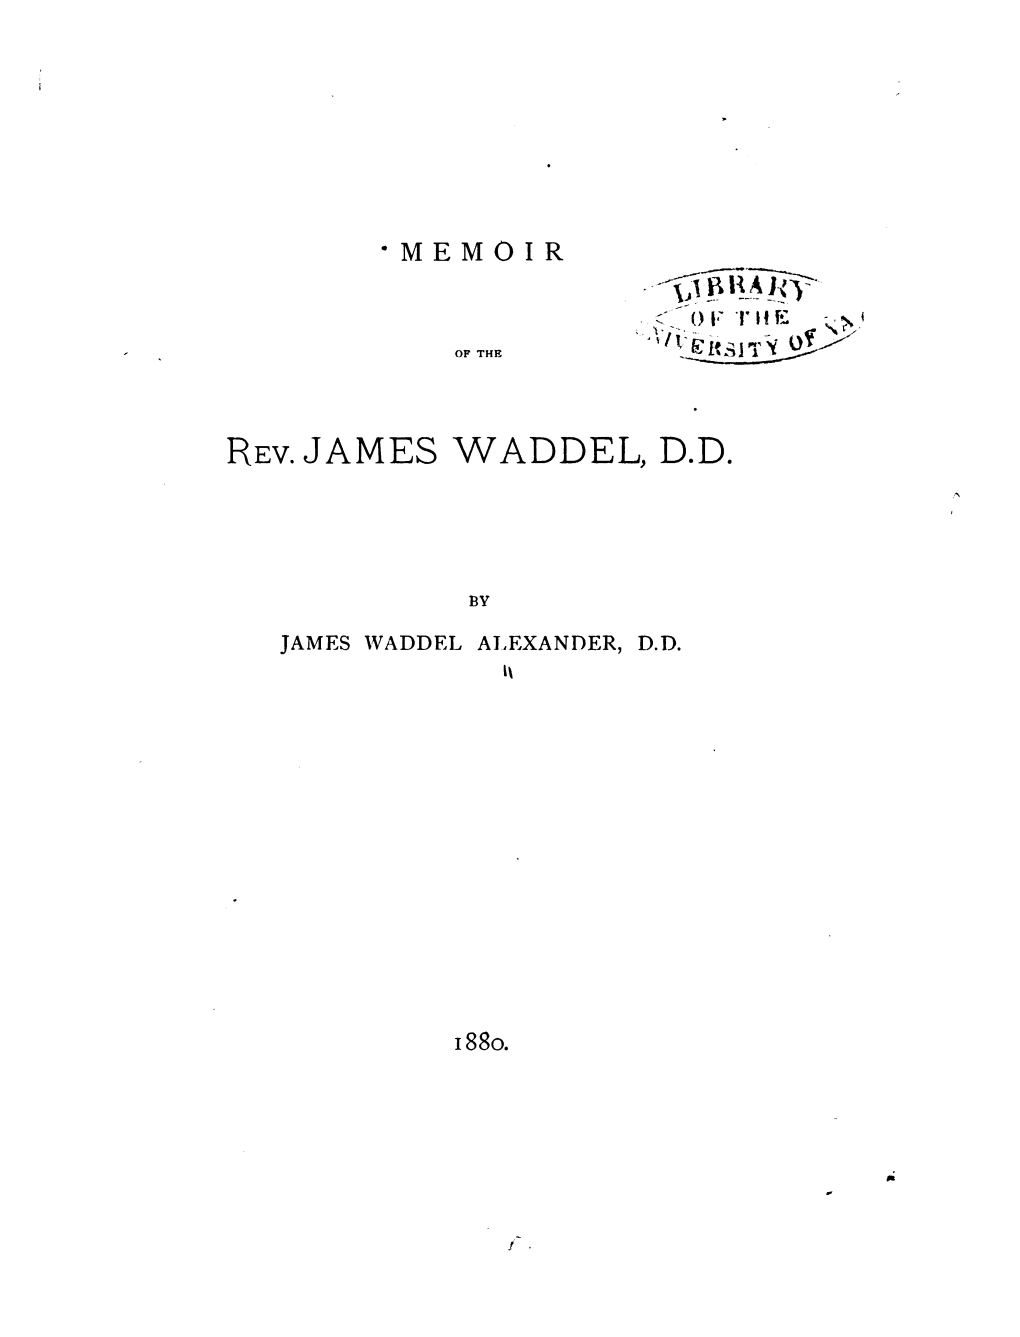 Memoir of the Rev. James Waddel